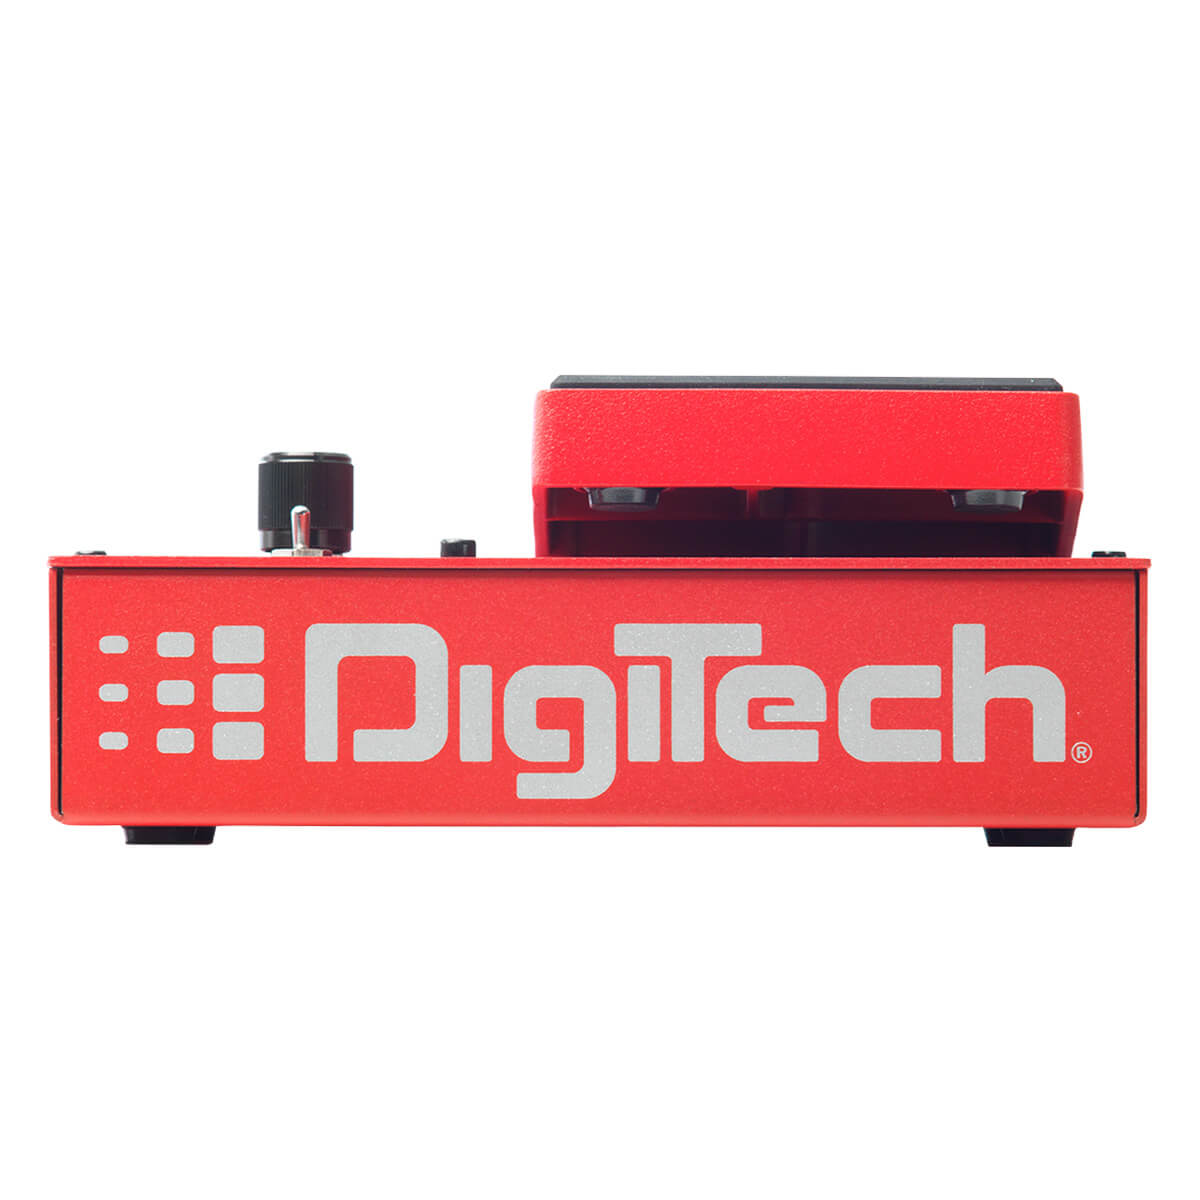 Digitech Whammy 5 Pitch Shift Pedal Pedal W/ Midi In